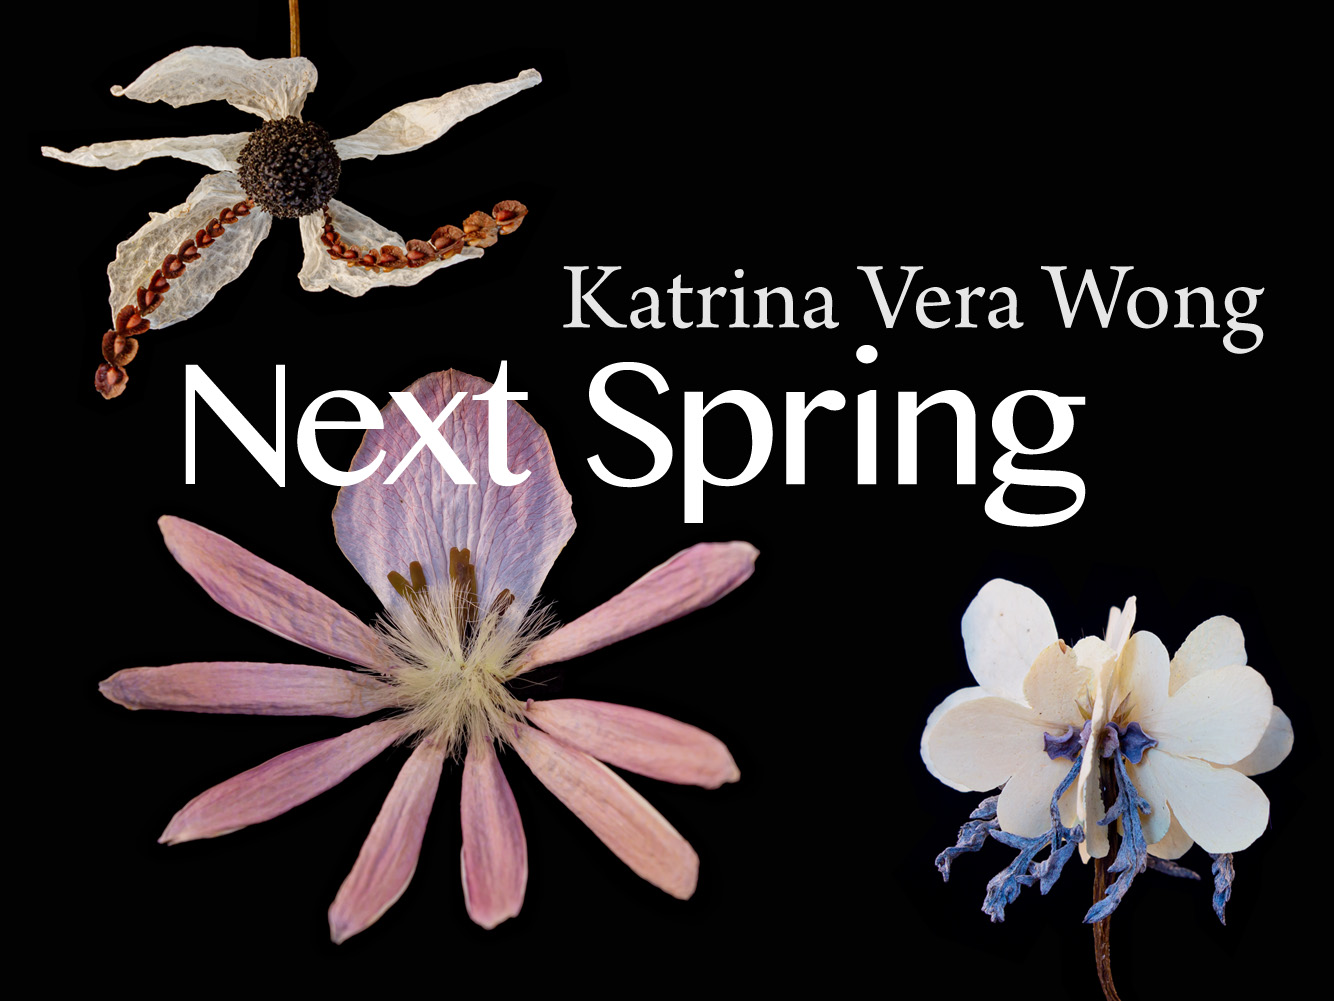 Katrina Vera Wong's reconstructed Frankenflora